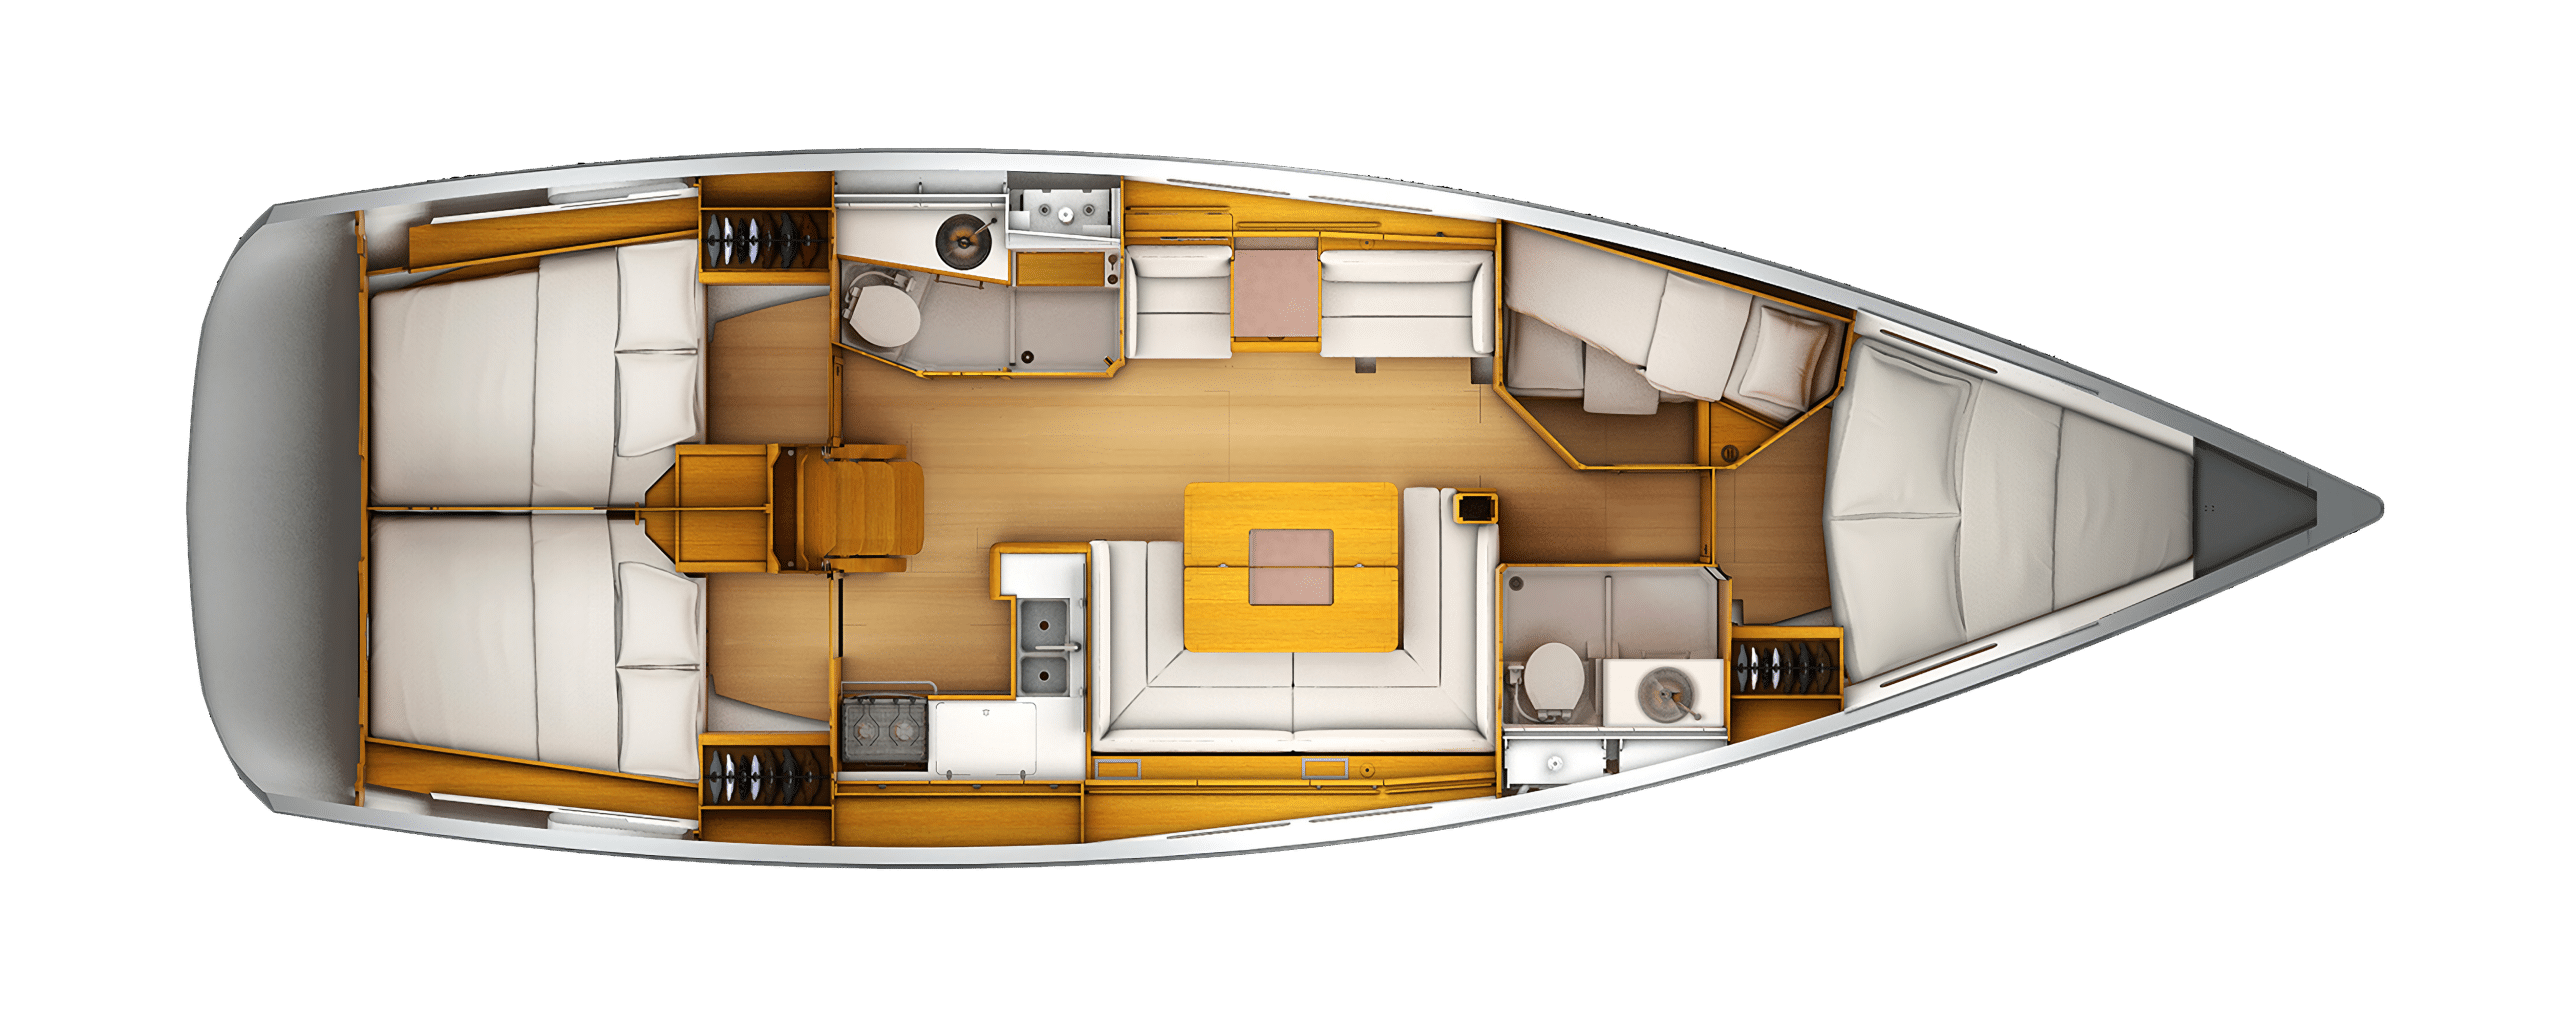 jeanneau-sun-odyssey-449-layout-4-cabins-2-heads